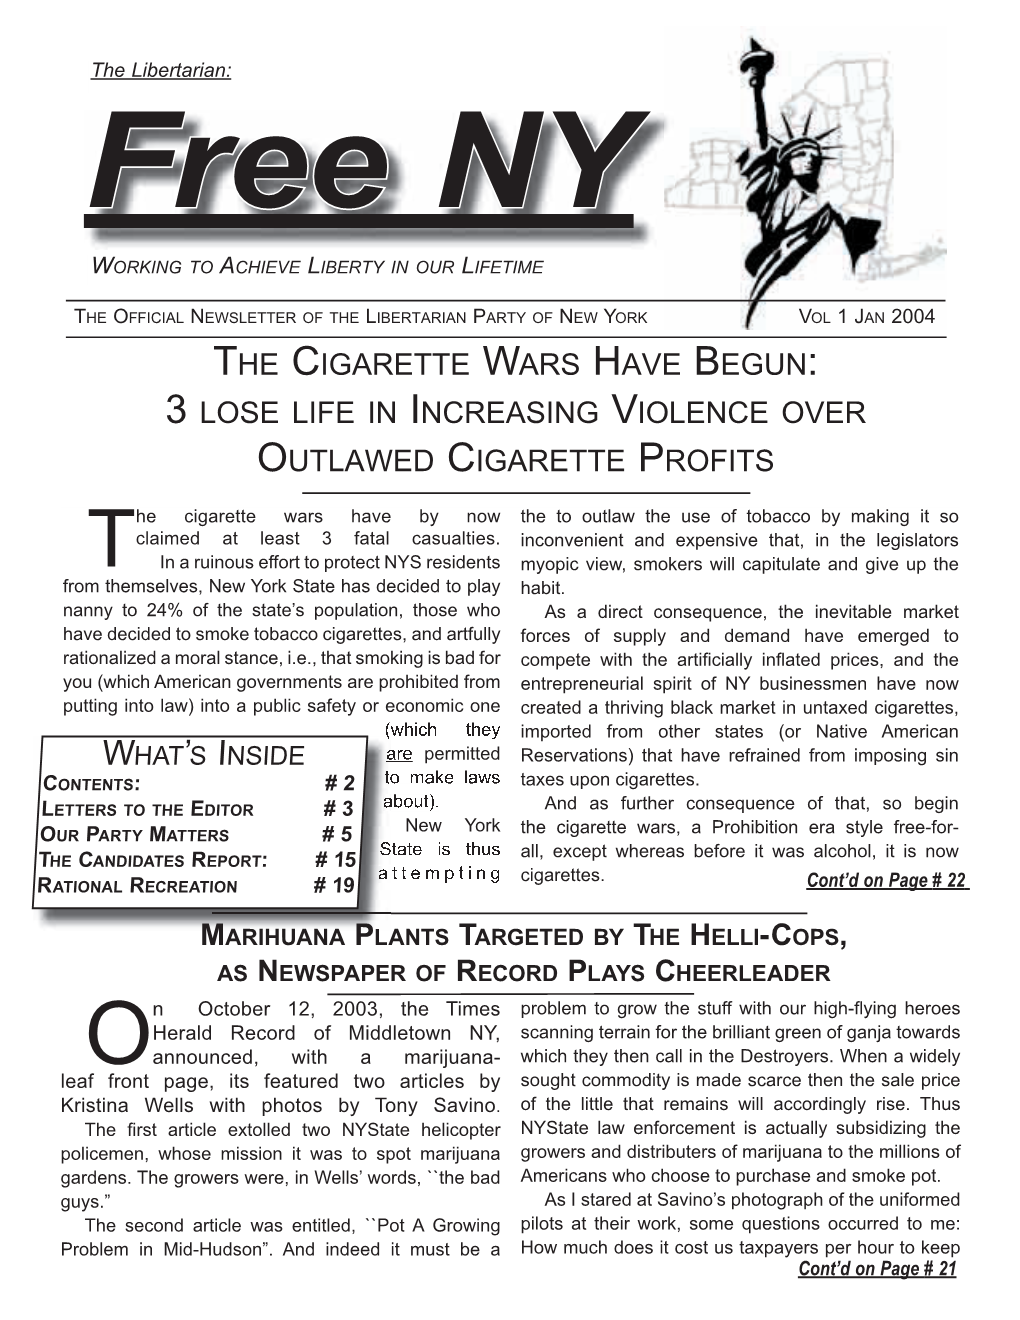 The Cigarette Wars Have Begun: 3 Lose Life in Increasing Violence Over Outlawed Cigarette Profits